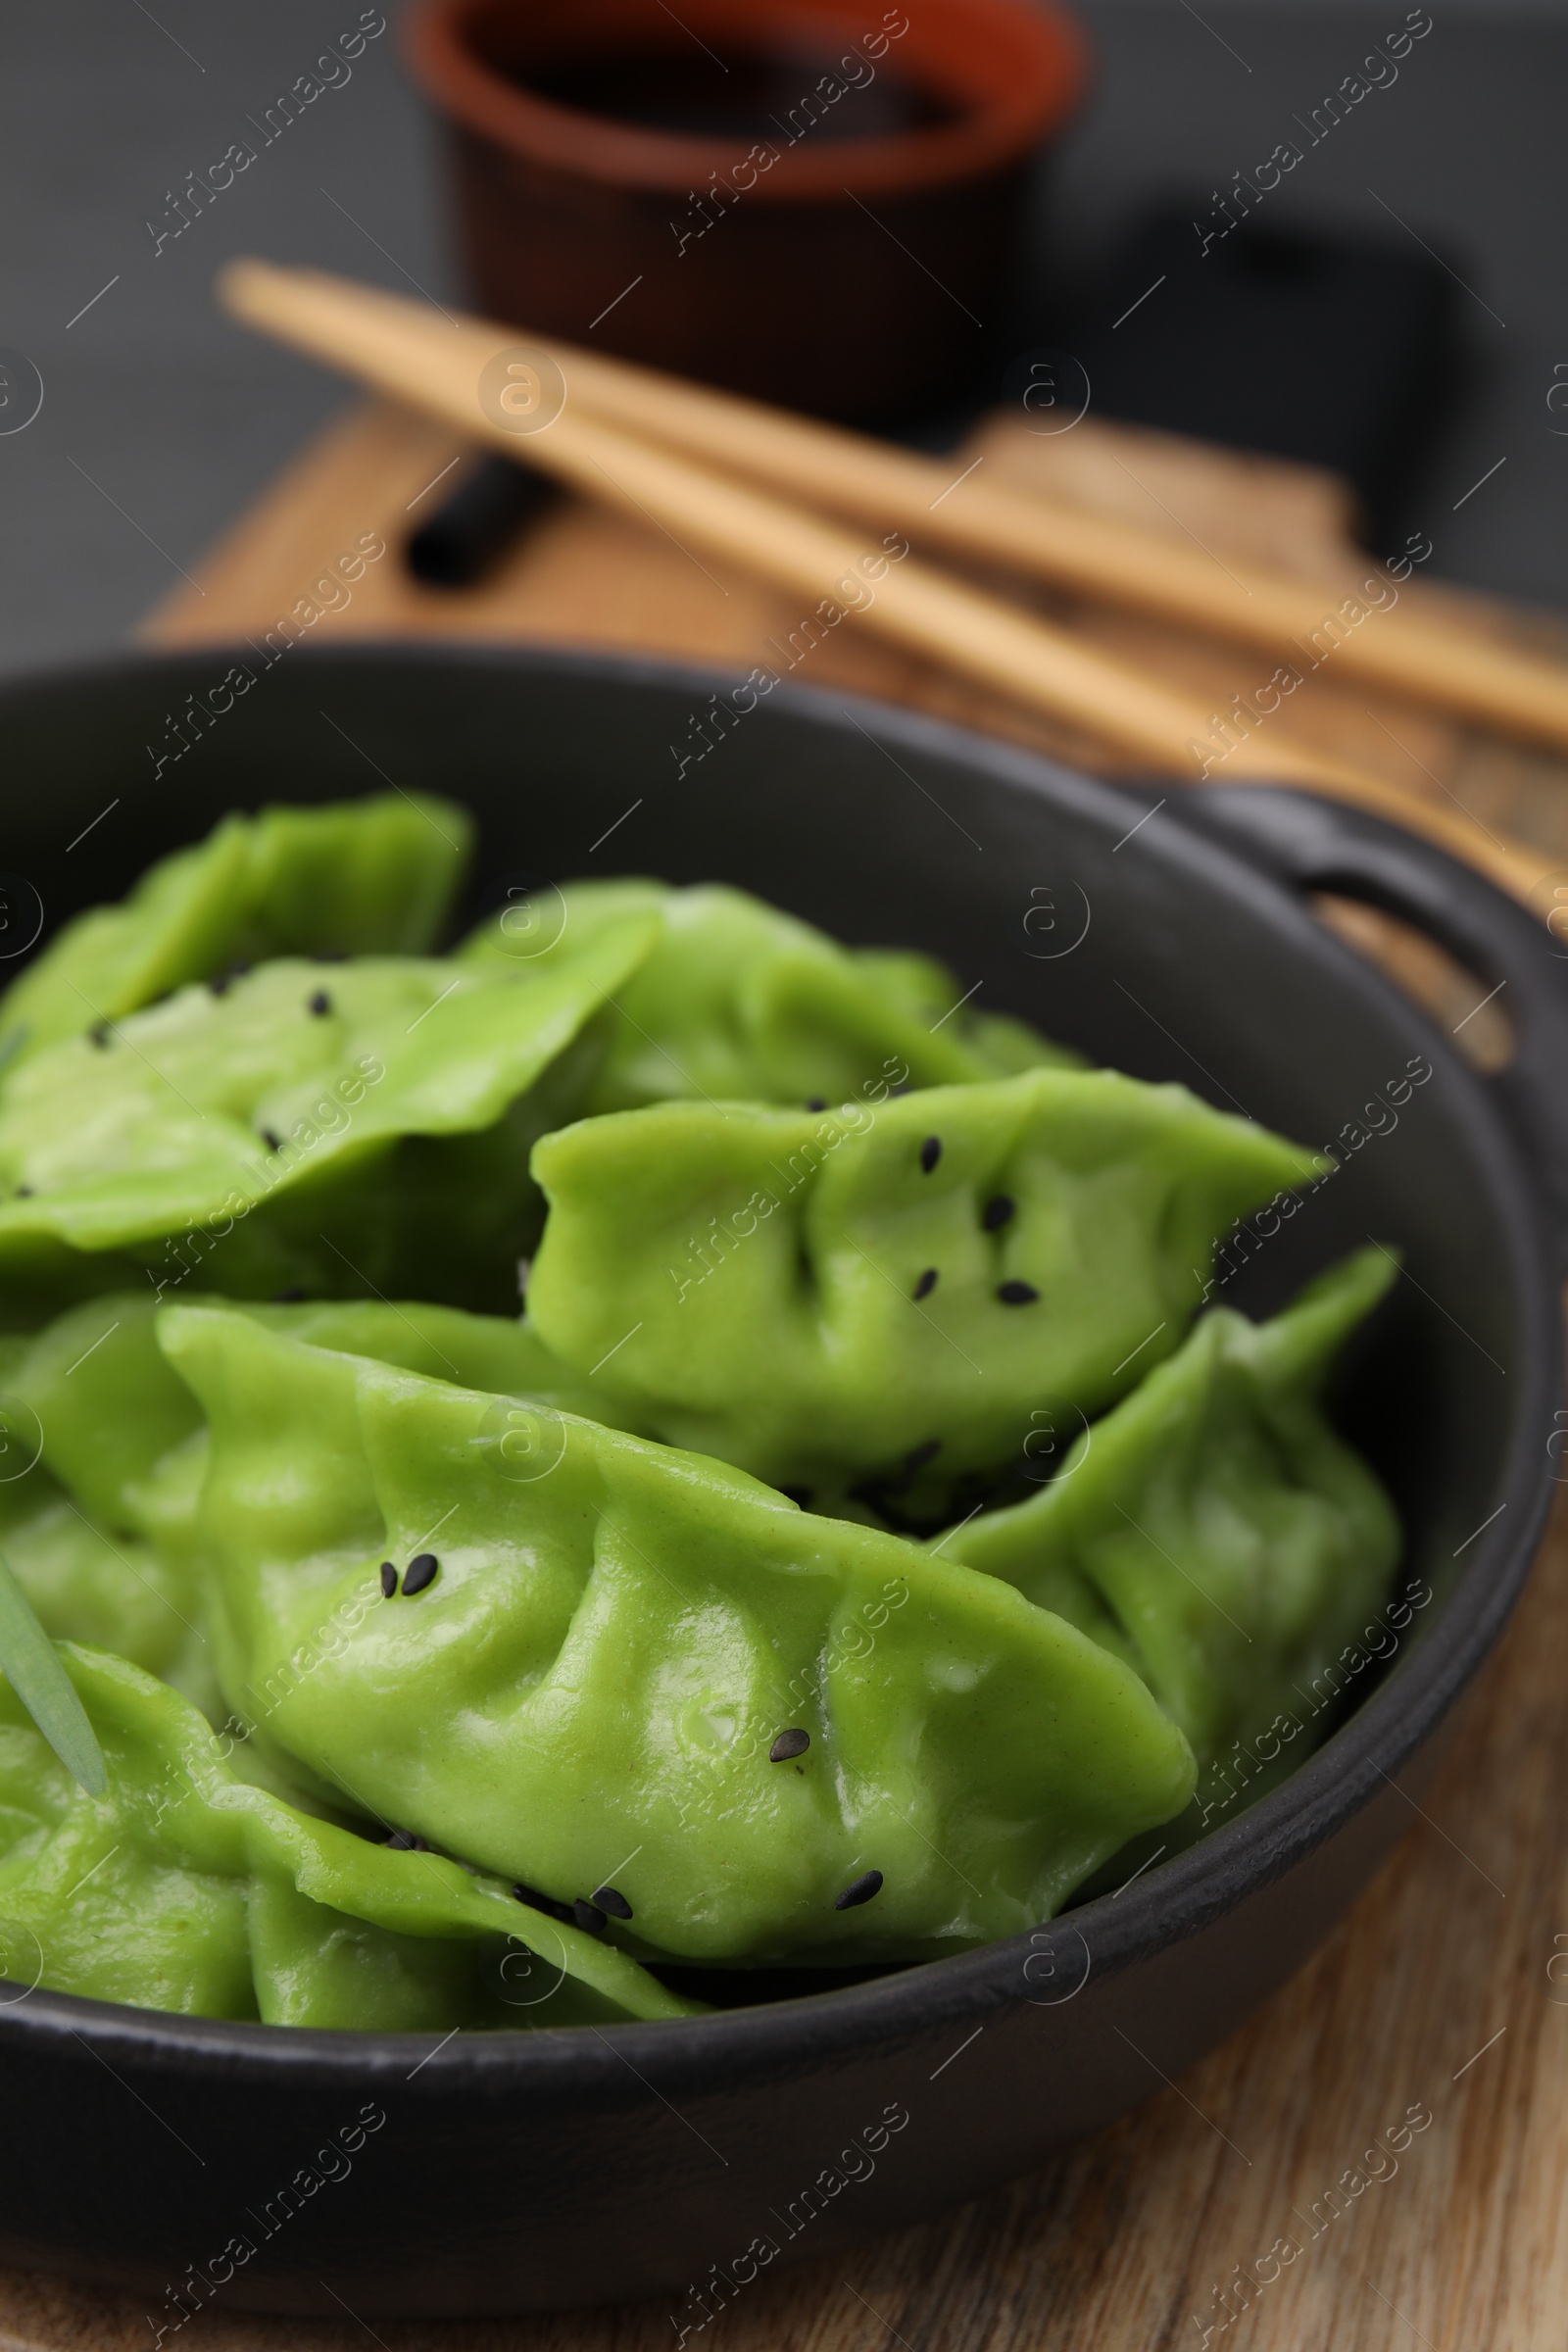 Photo of Delicious green dumplings (gyozas) on wooden table, closeup